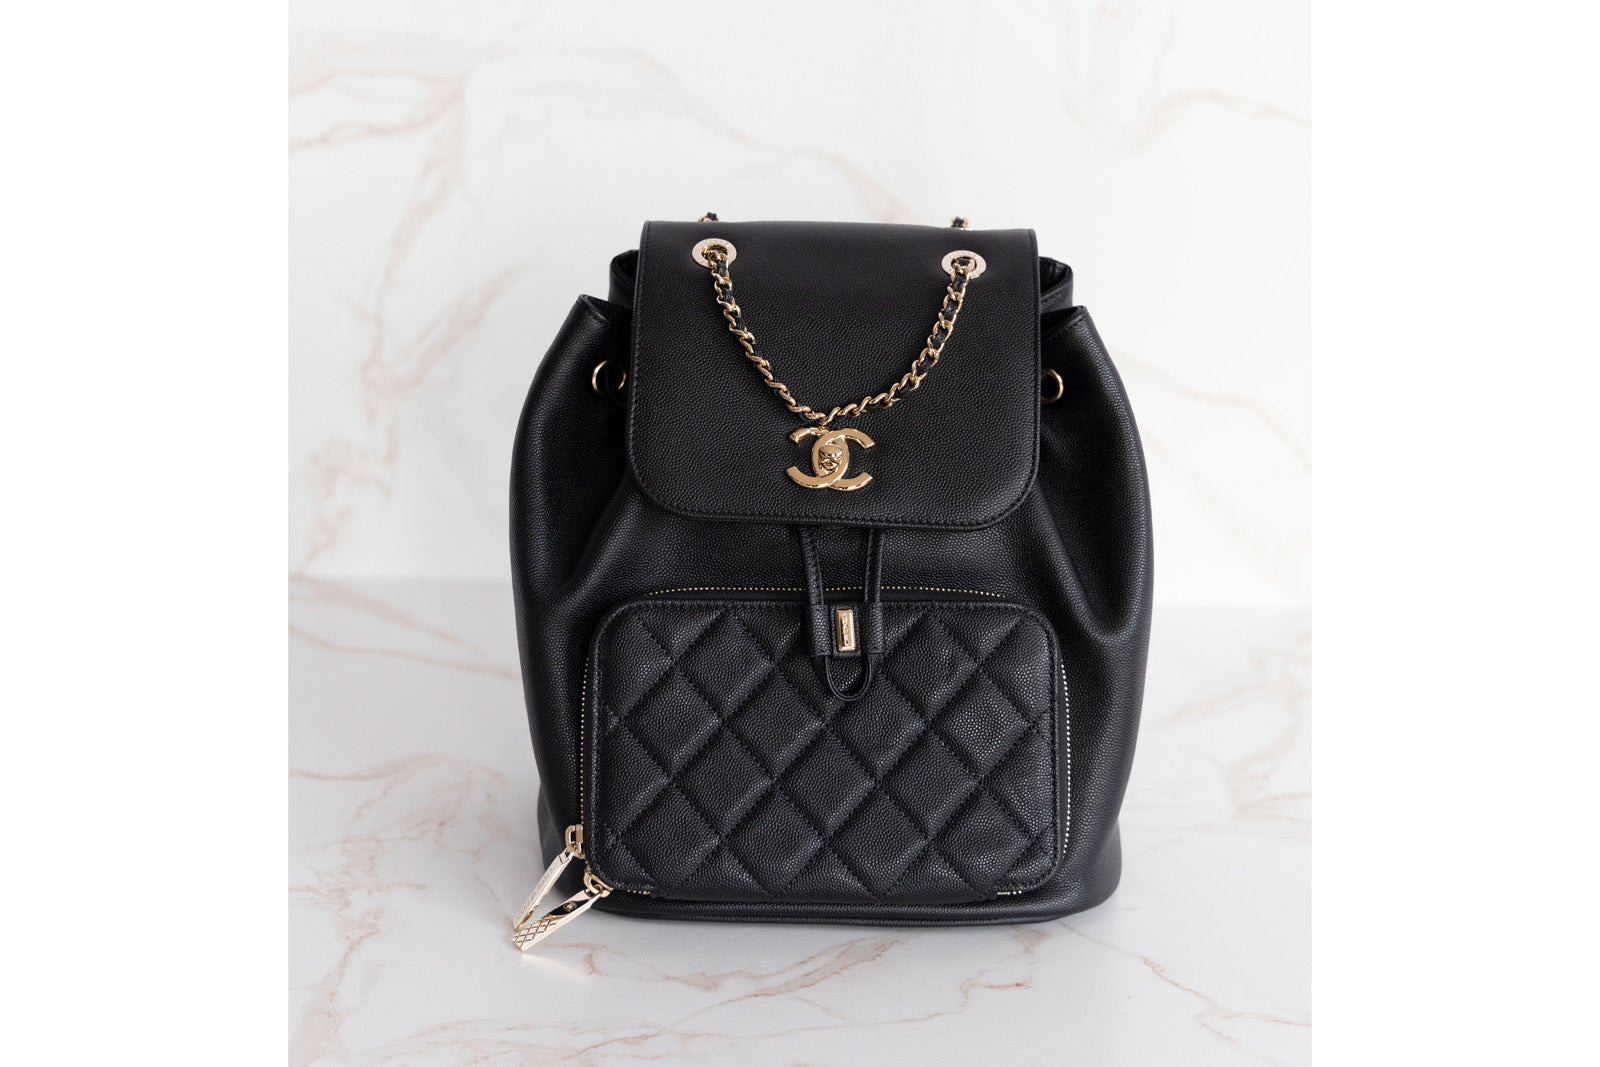 CHANELChanel Affinity Medium Size Black Flap Bag